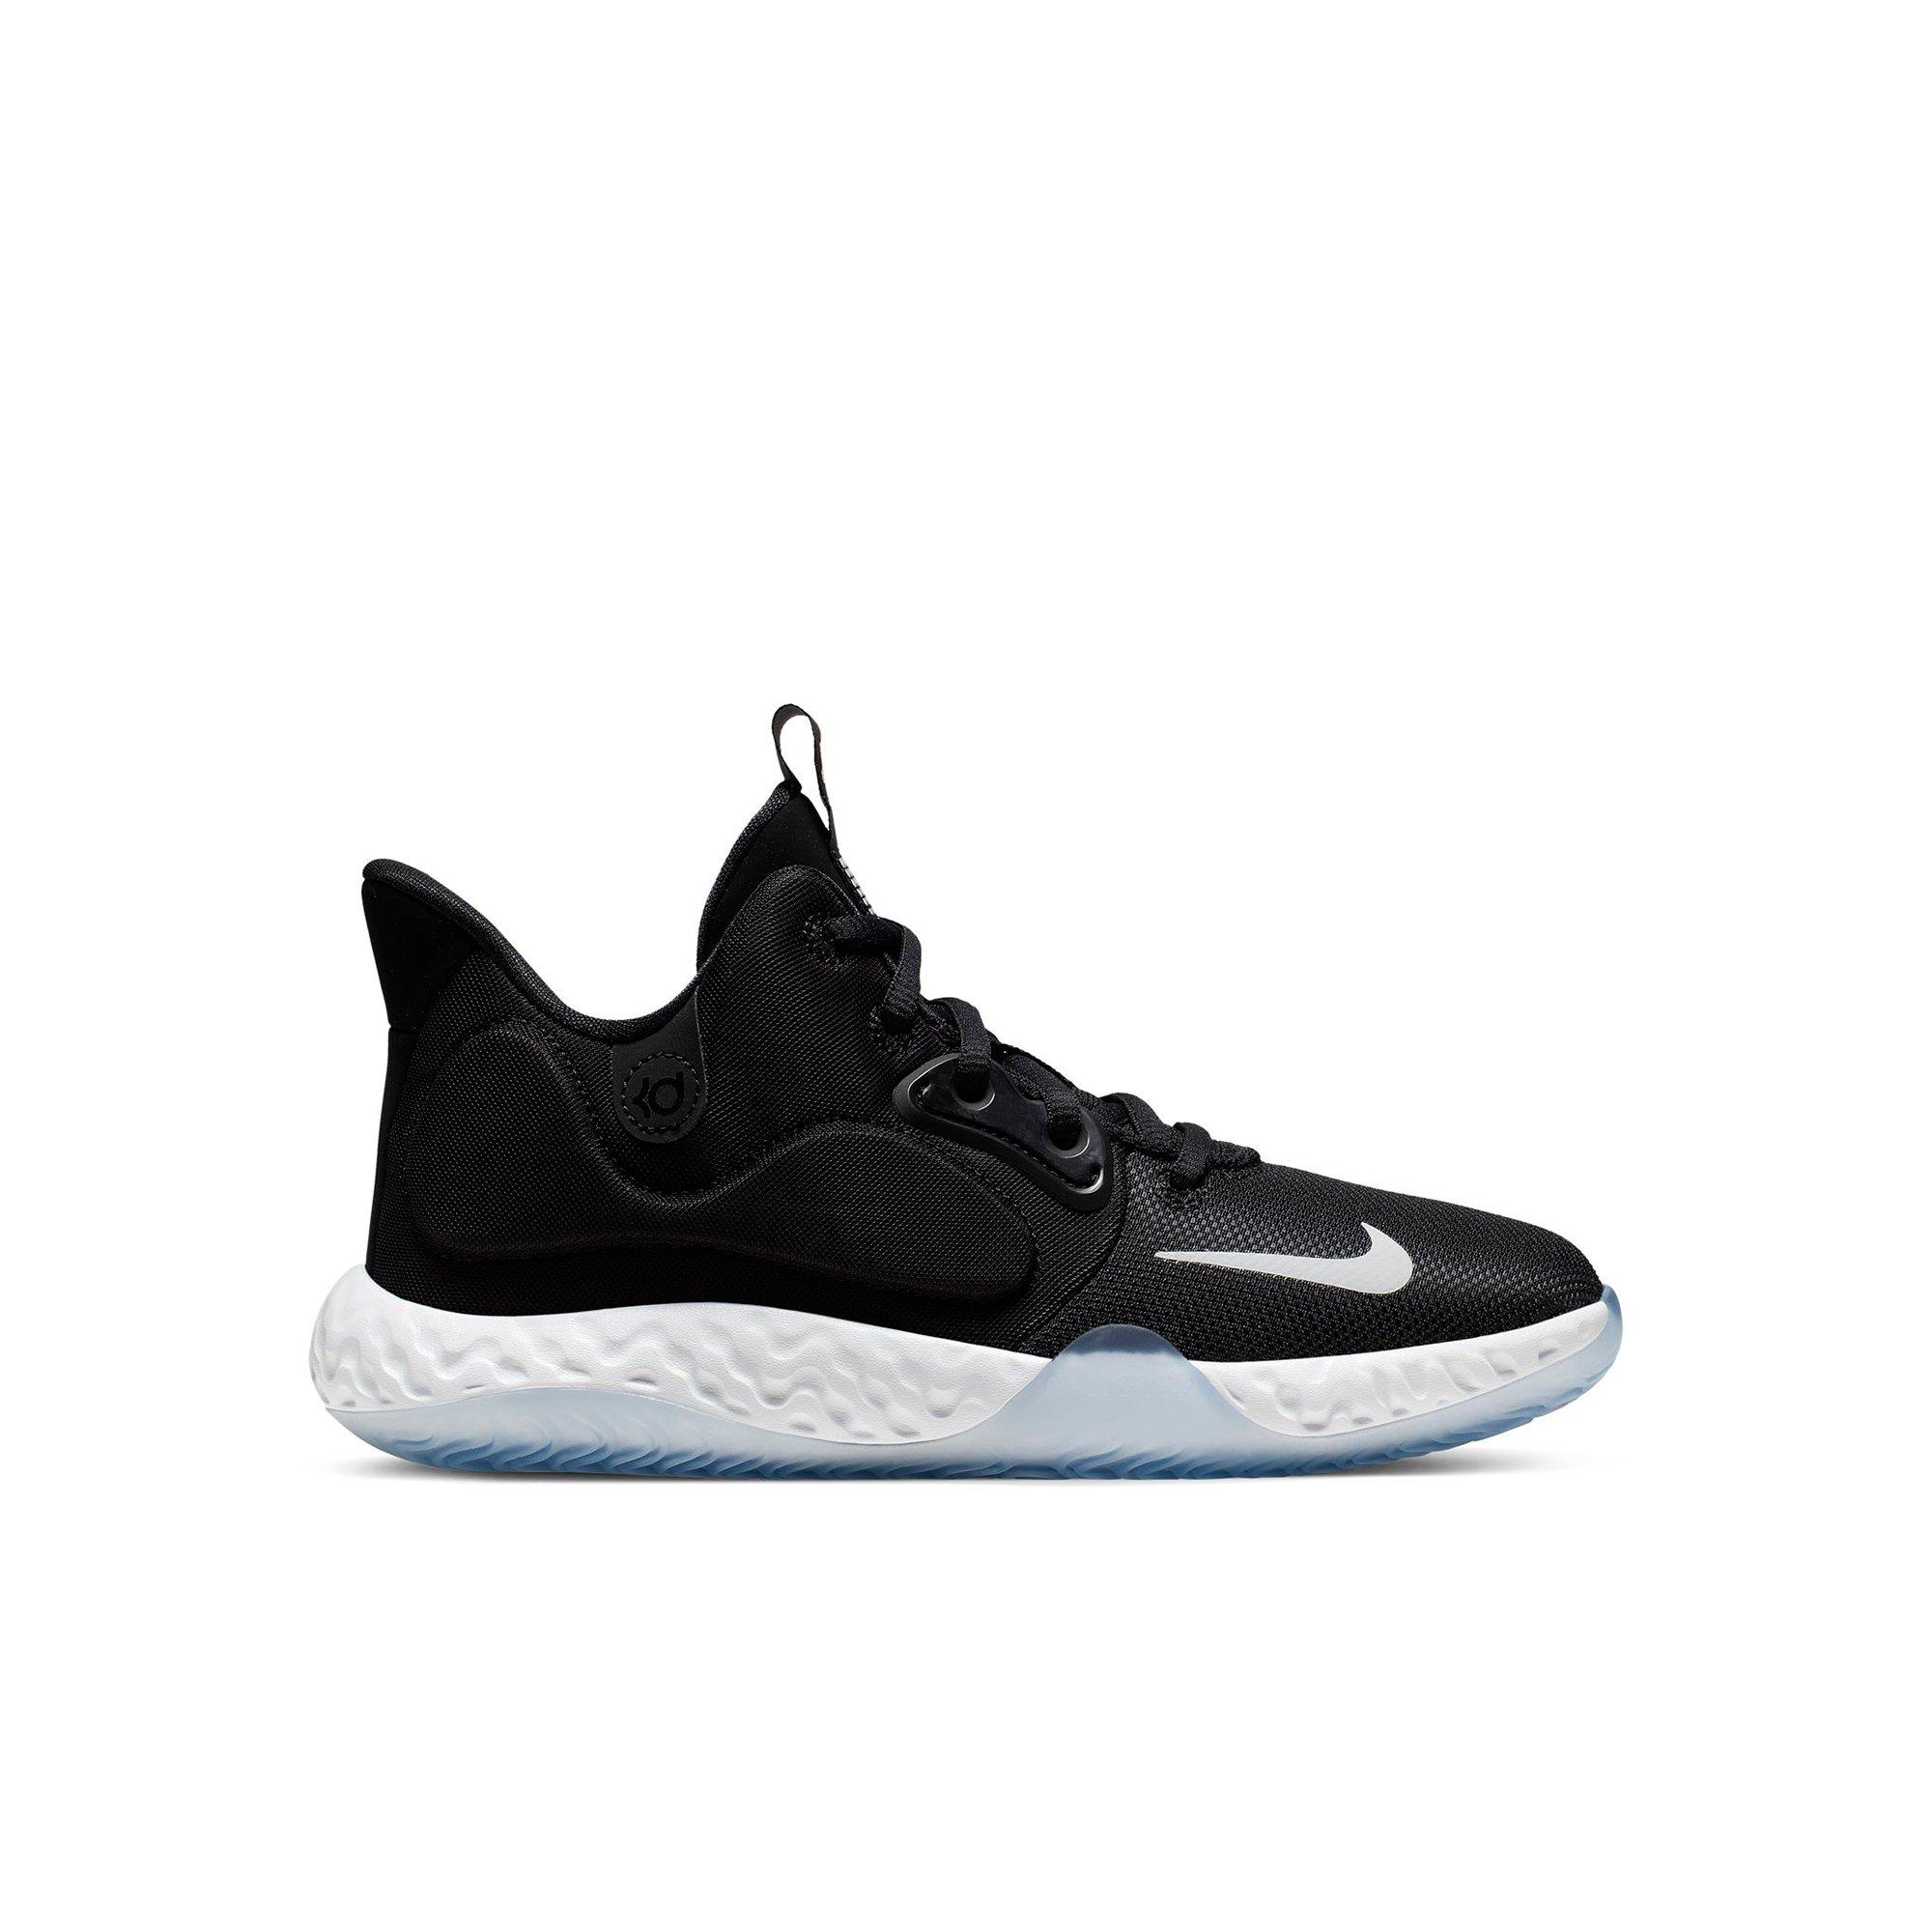 kd basketball shoes black